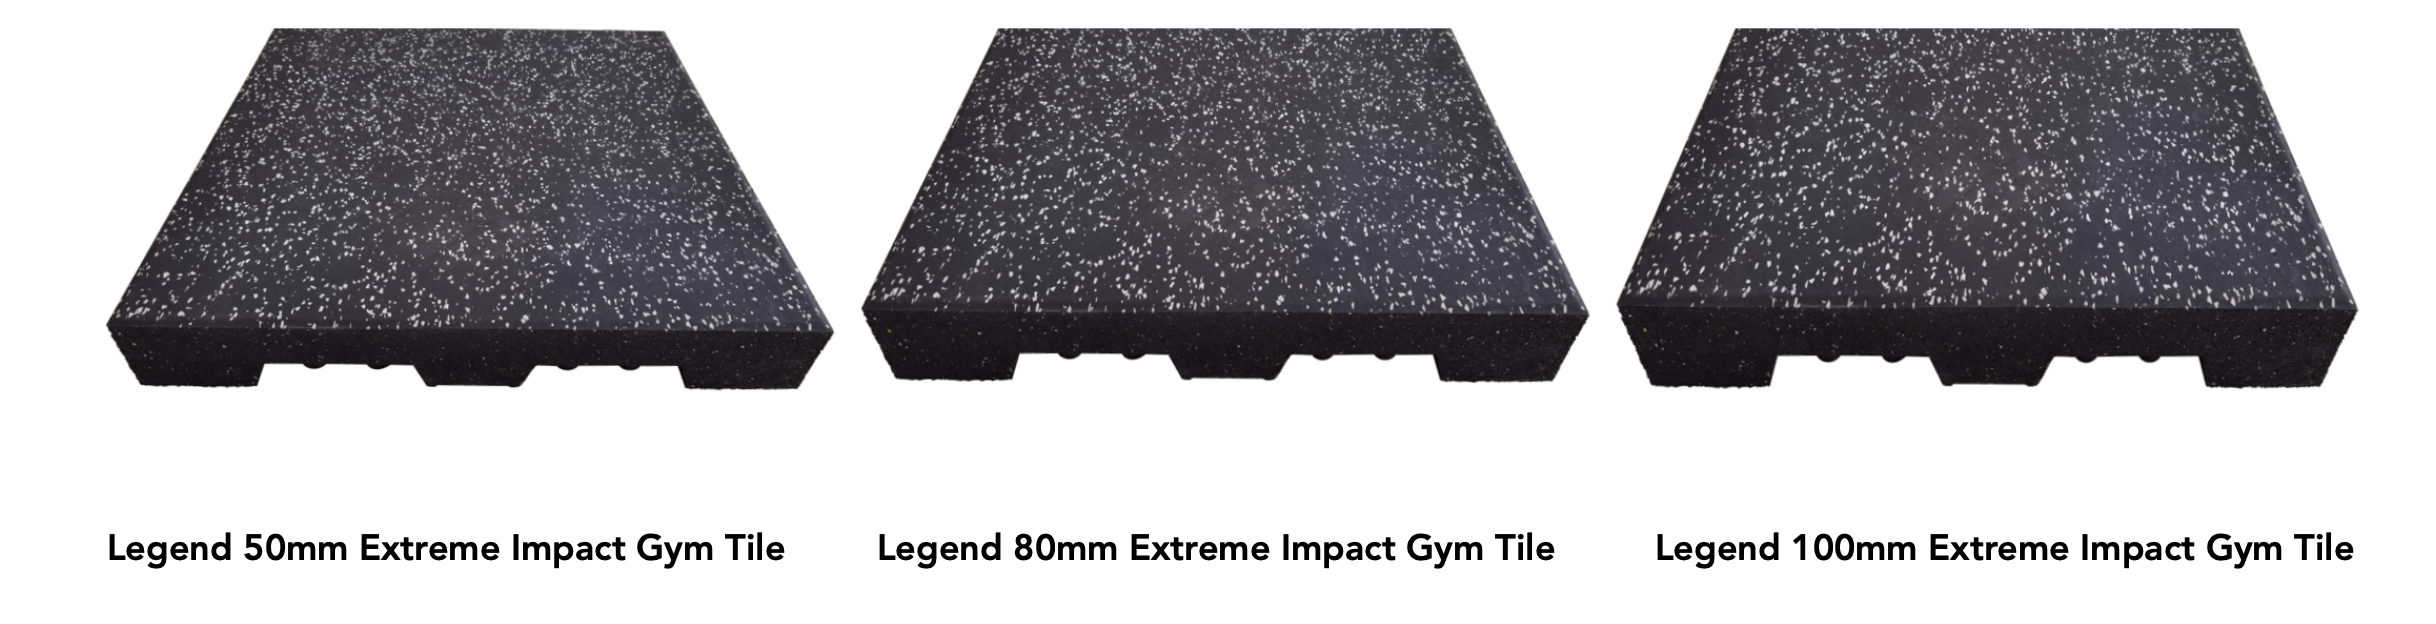 Legend Extreme Impact Gym Tiles